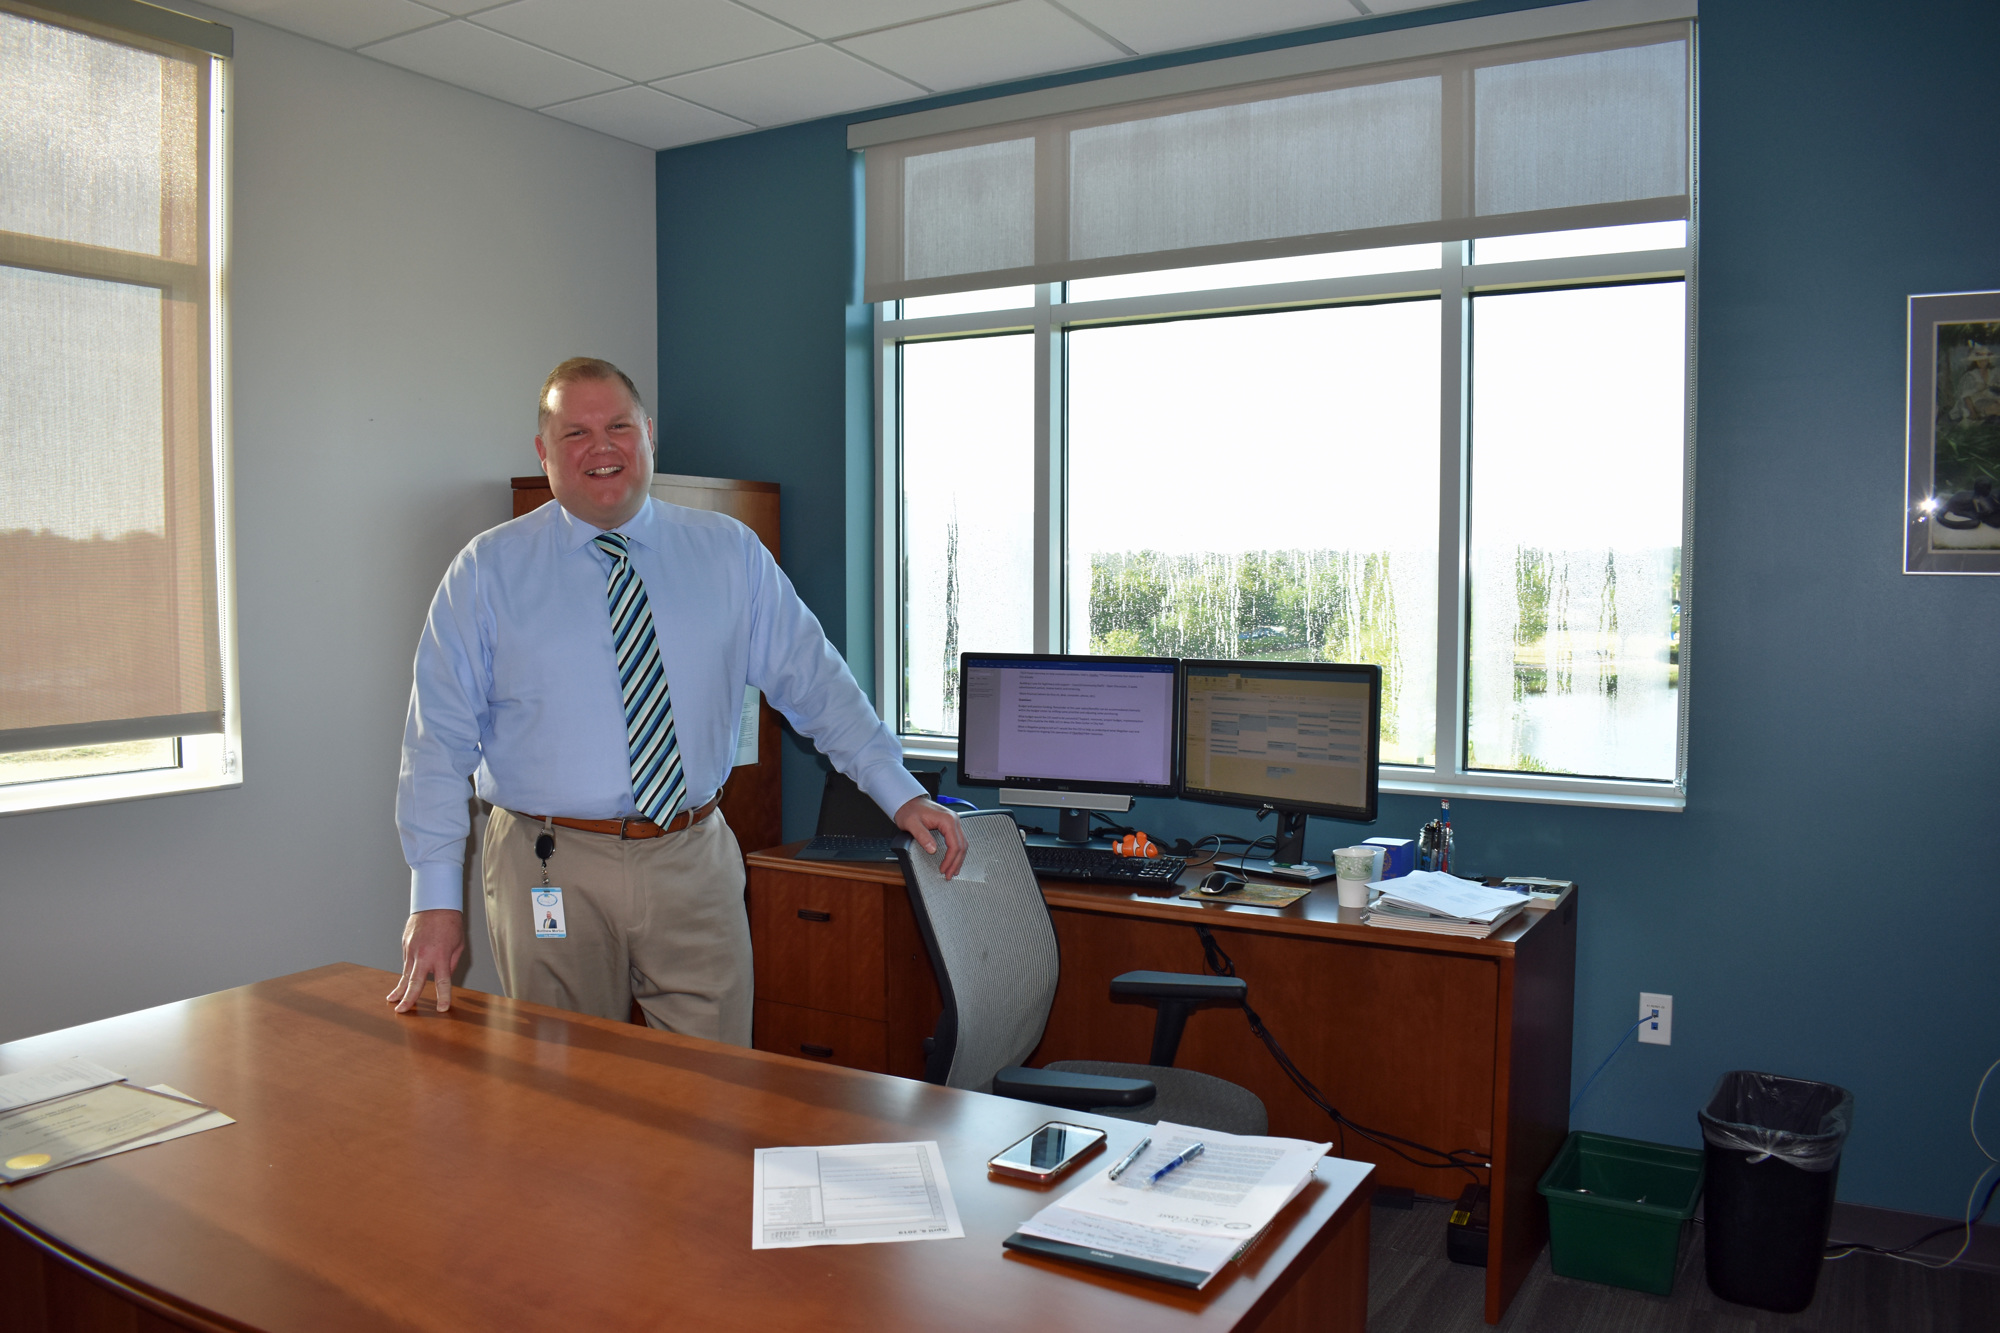 Matt Morton poses in his corner office at City Hall. Photo courtesy of the city of Palm Coast